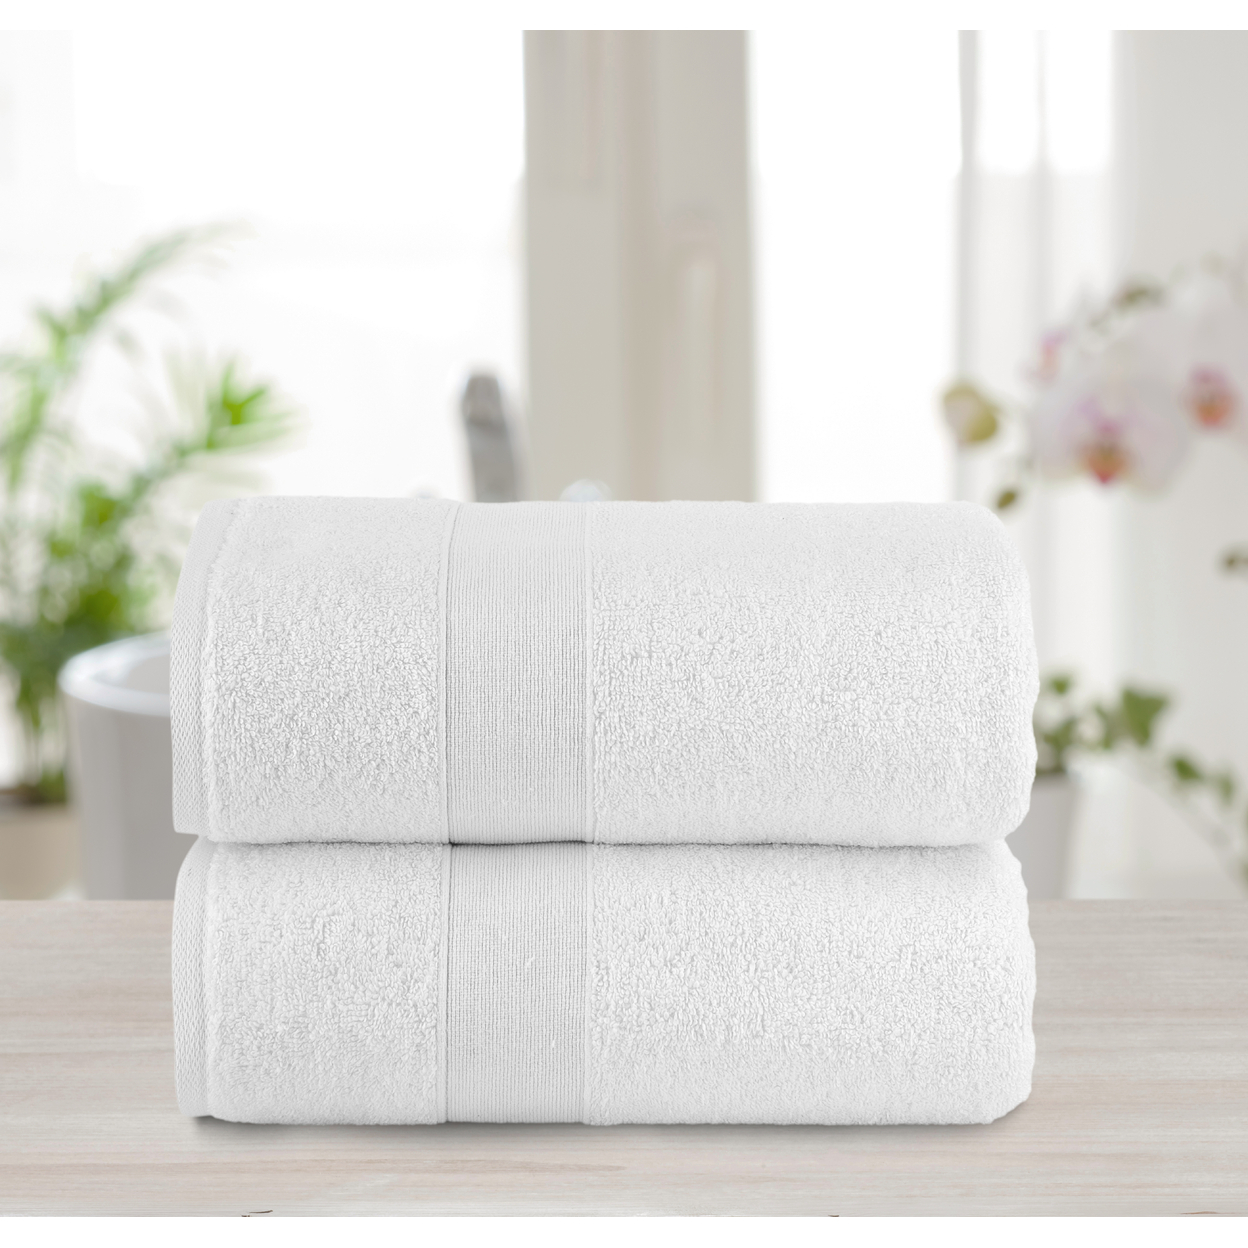 Chic Home Luxurious 2-Piece 100% Pure Turkish Cotton Bath Sheet Towels, 30x68, Woven Dobby Border Design, OEKO-TEX Certified Set - White